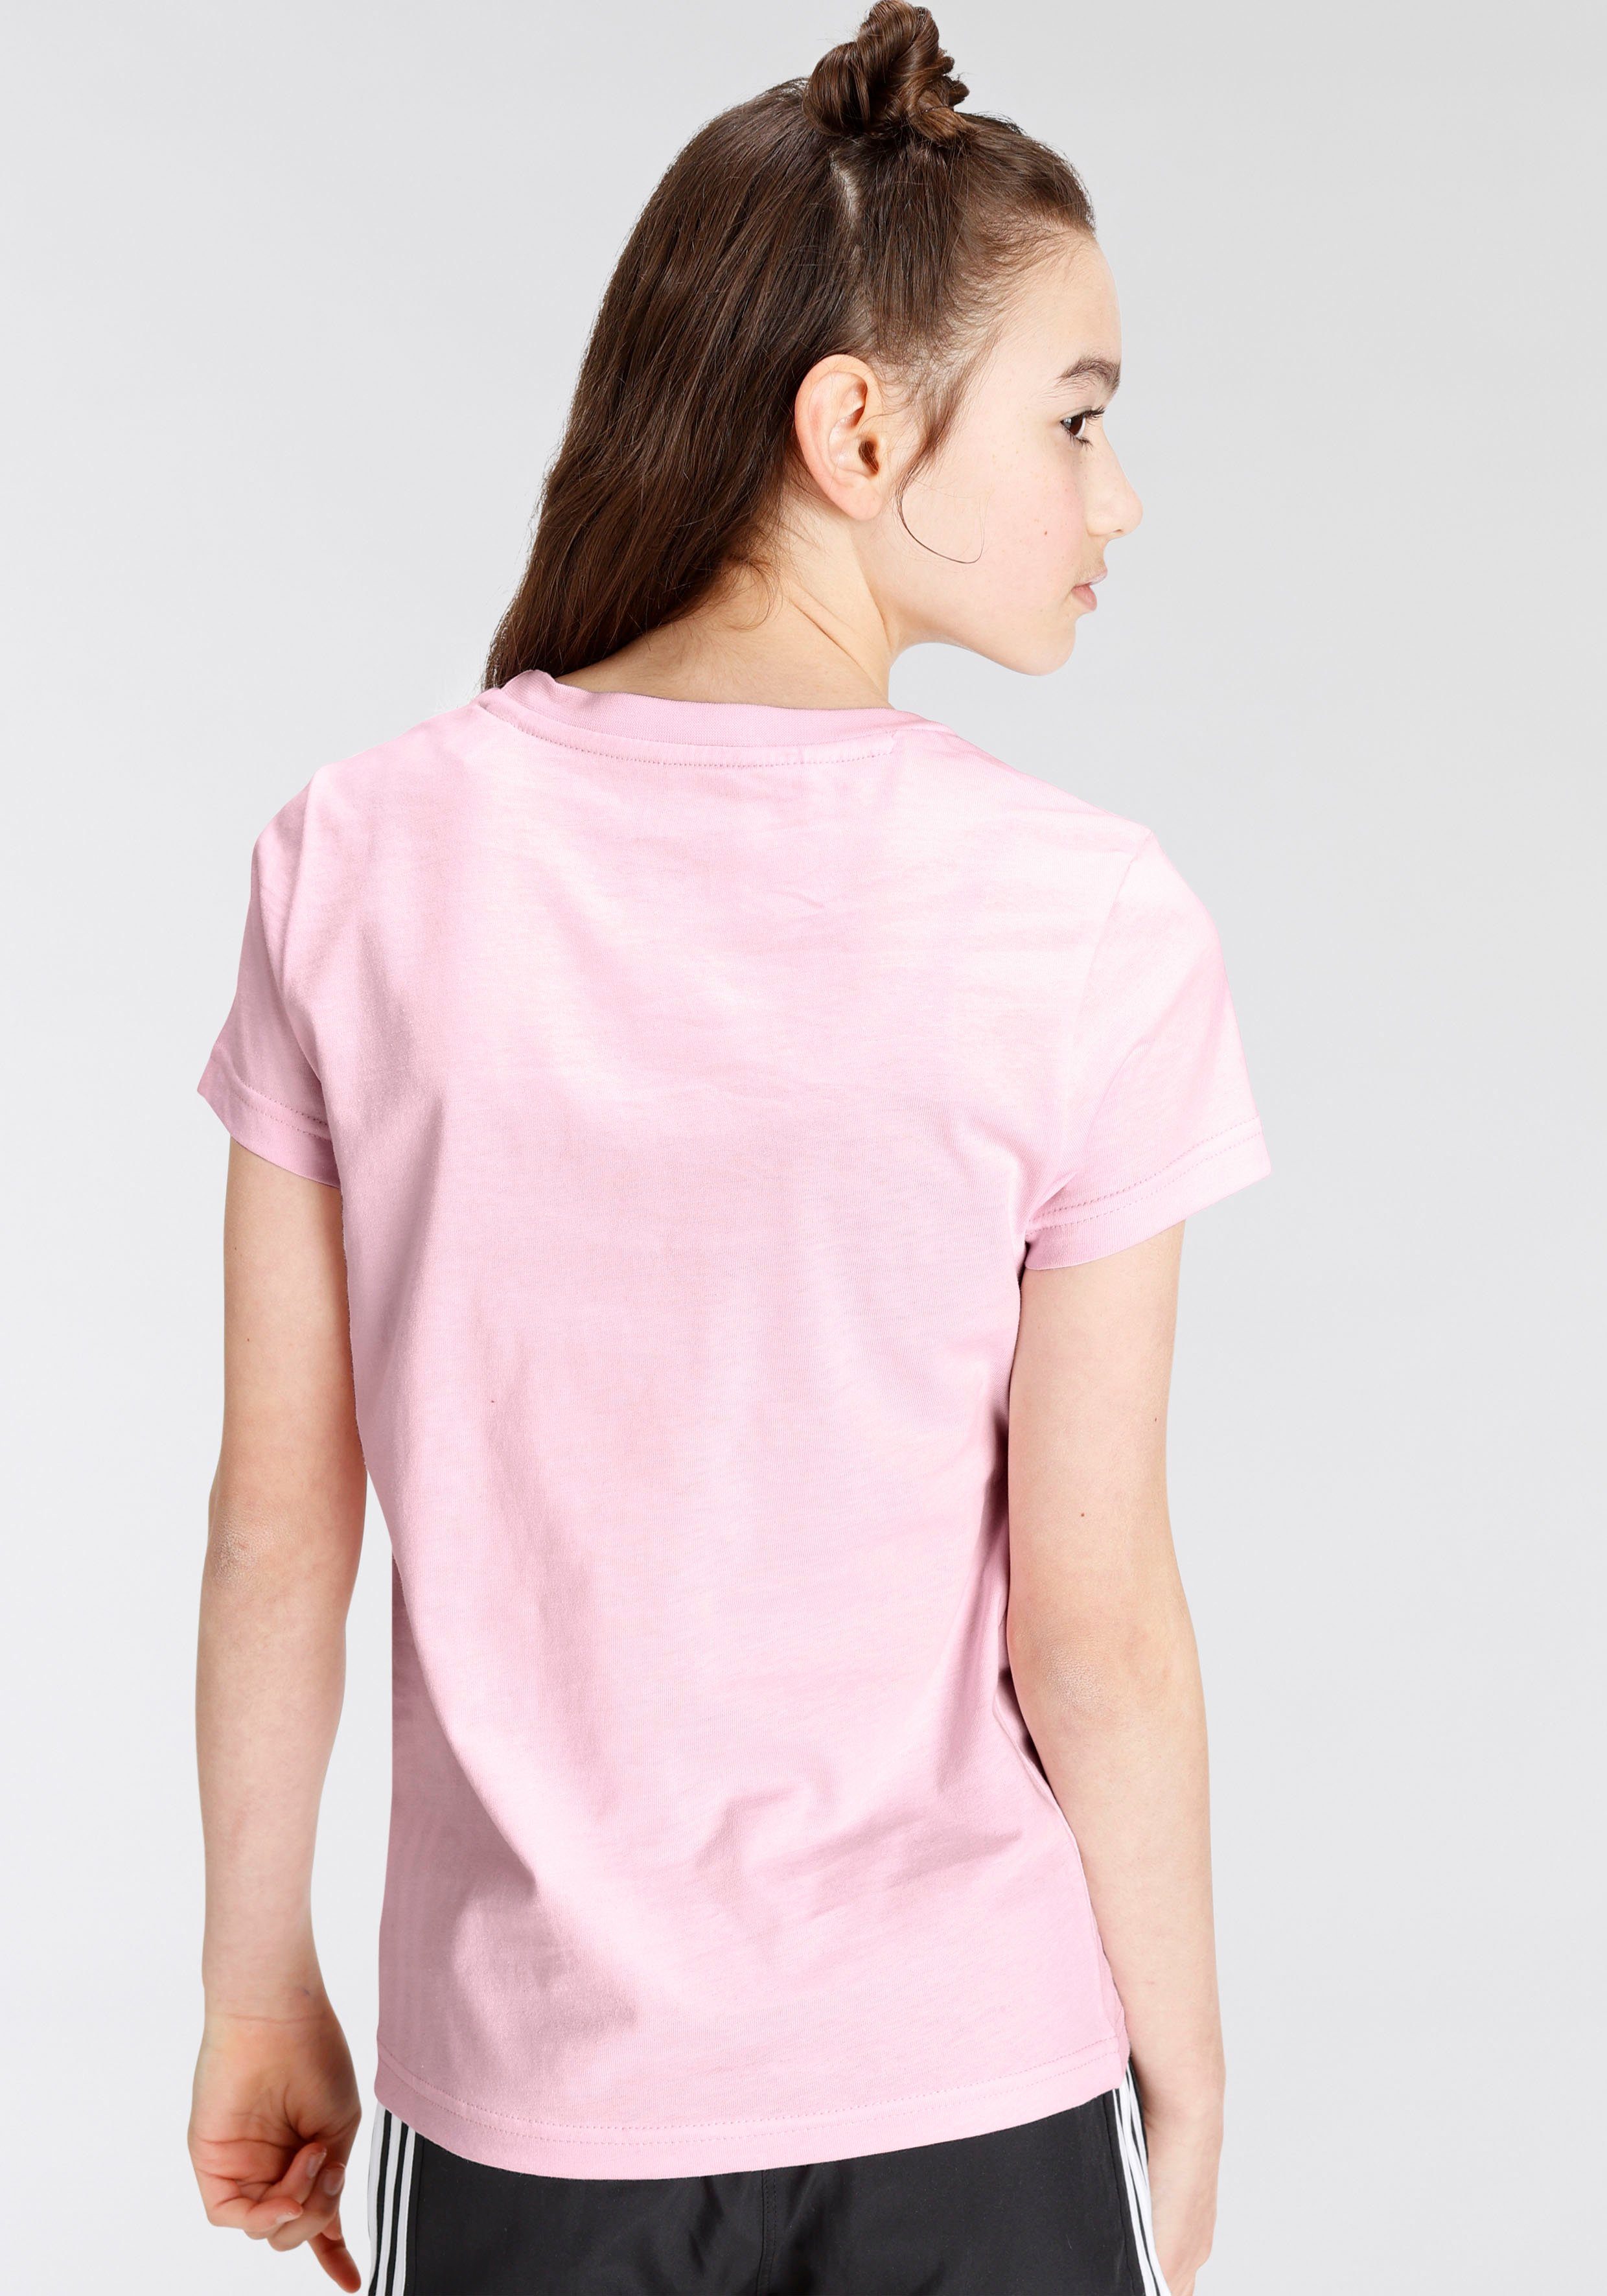 White T-Shirt ESSENTIALS Sportswear Pink Clear adidas BIG LOGO / COTTON